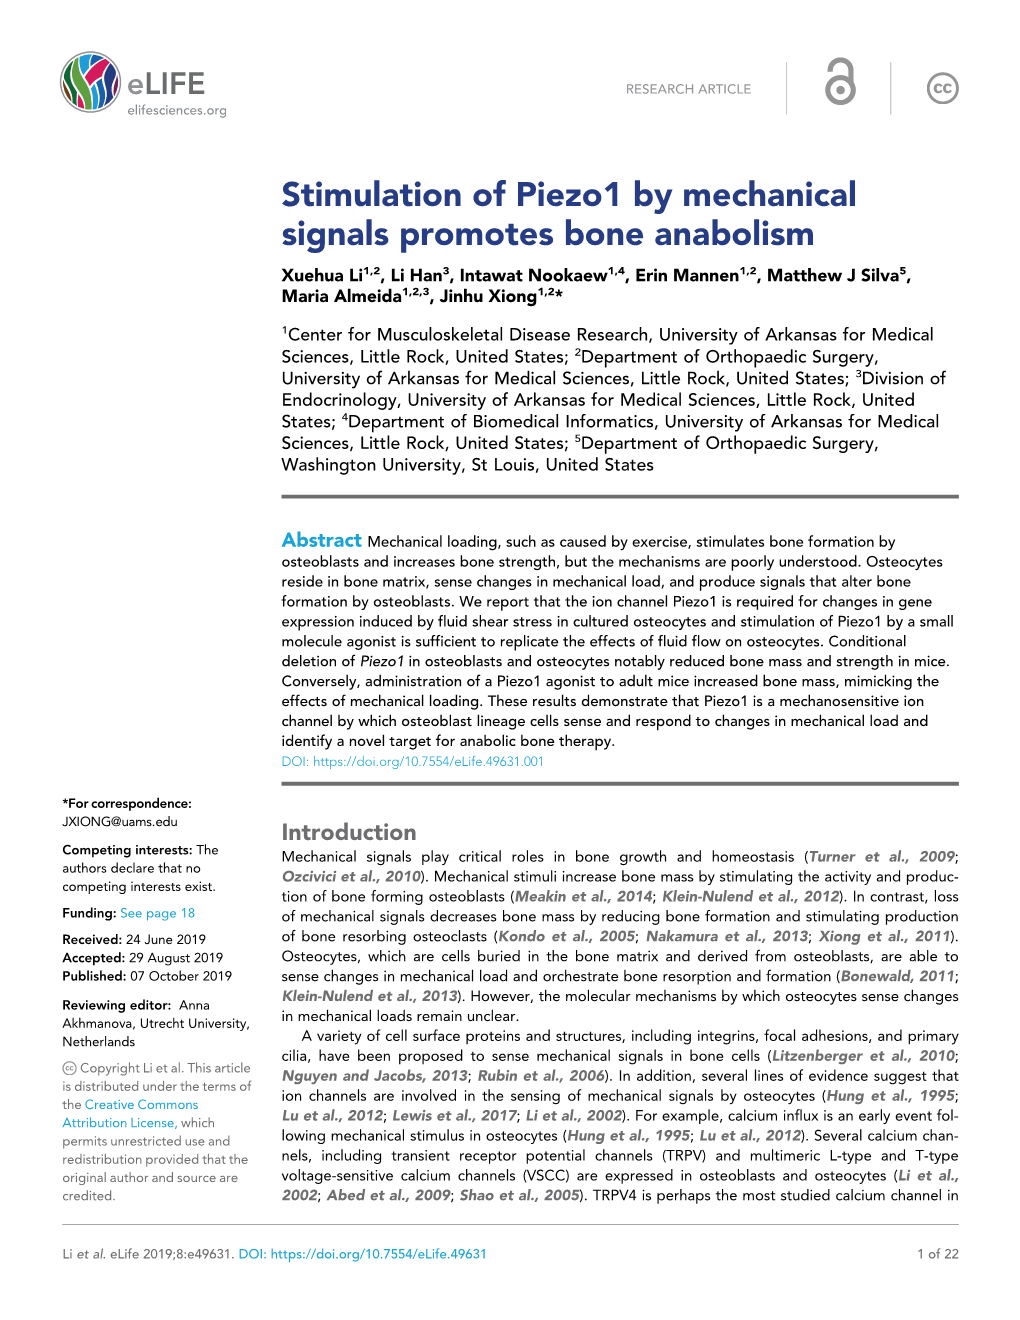 Stimulation of Piezo1 by Mechanical Signals Promotes Bone Anabolism